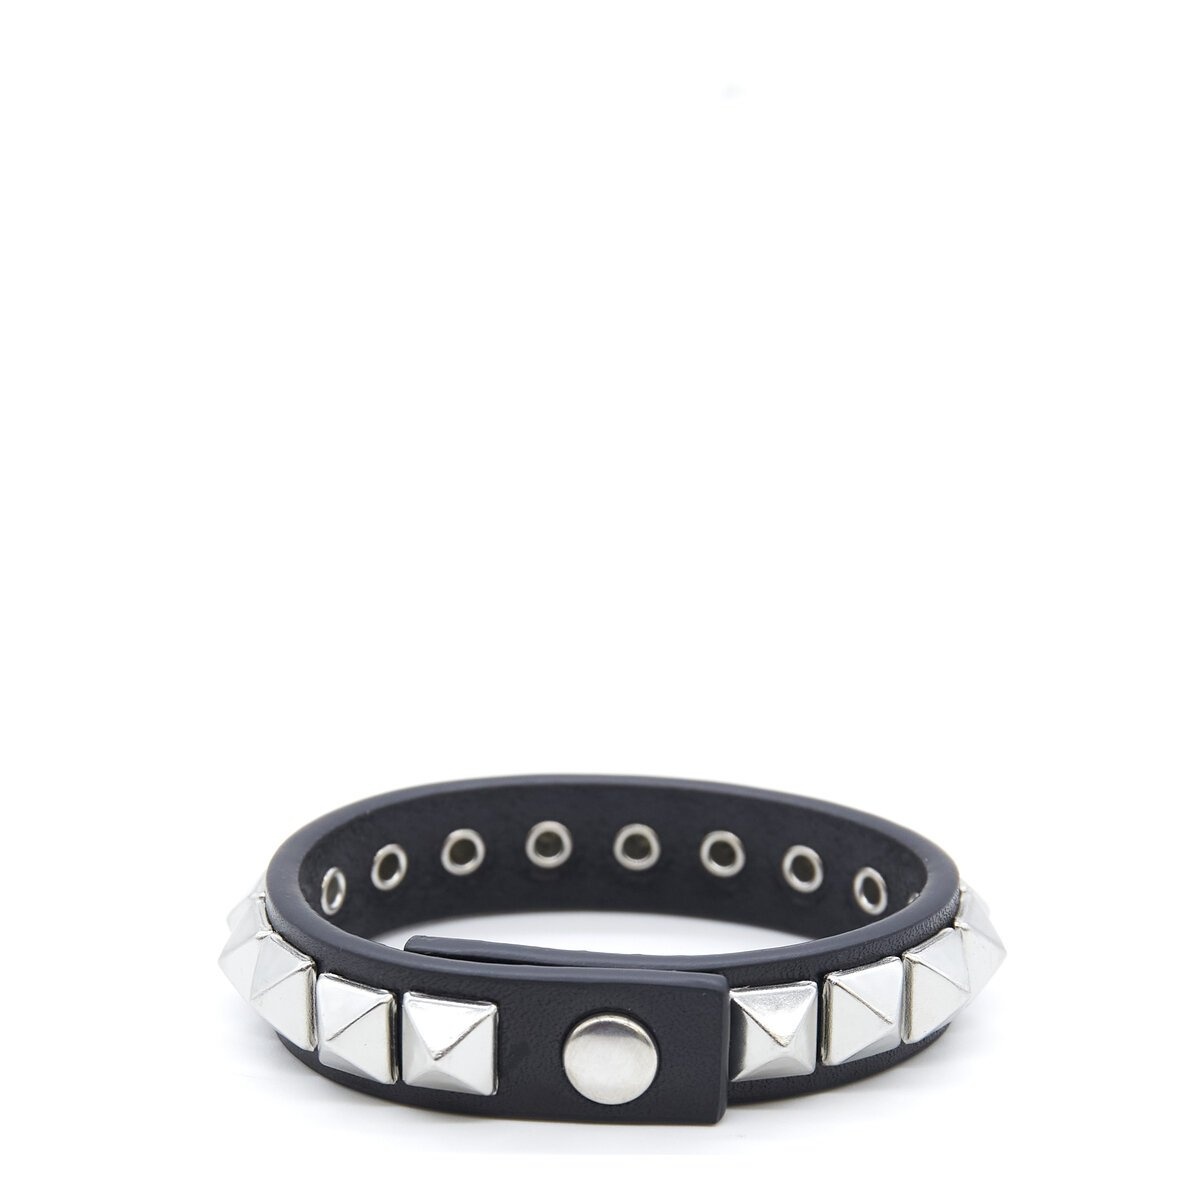 Pyramid Design Leather Bracelet in Black - 2